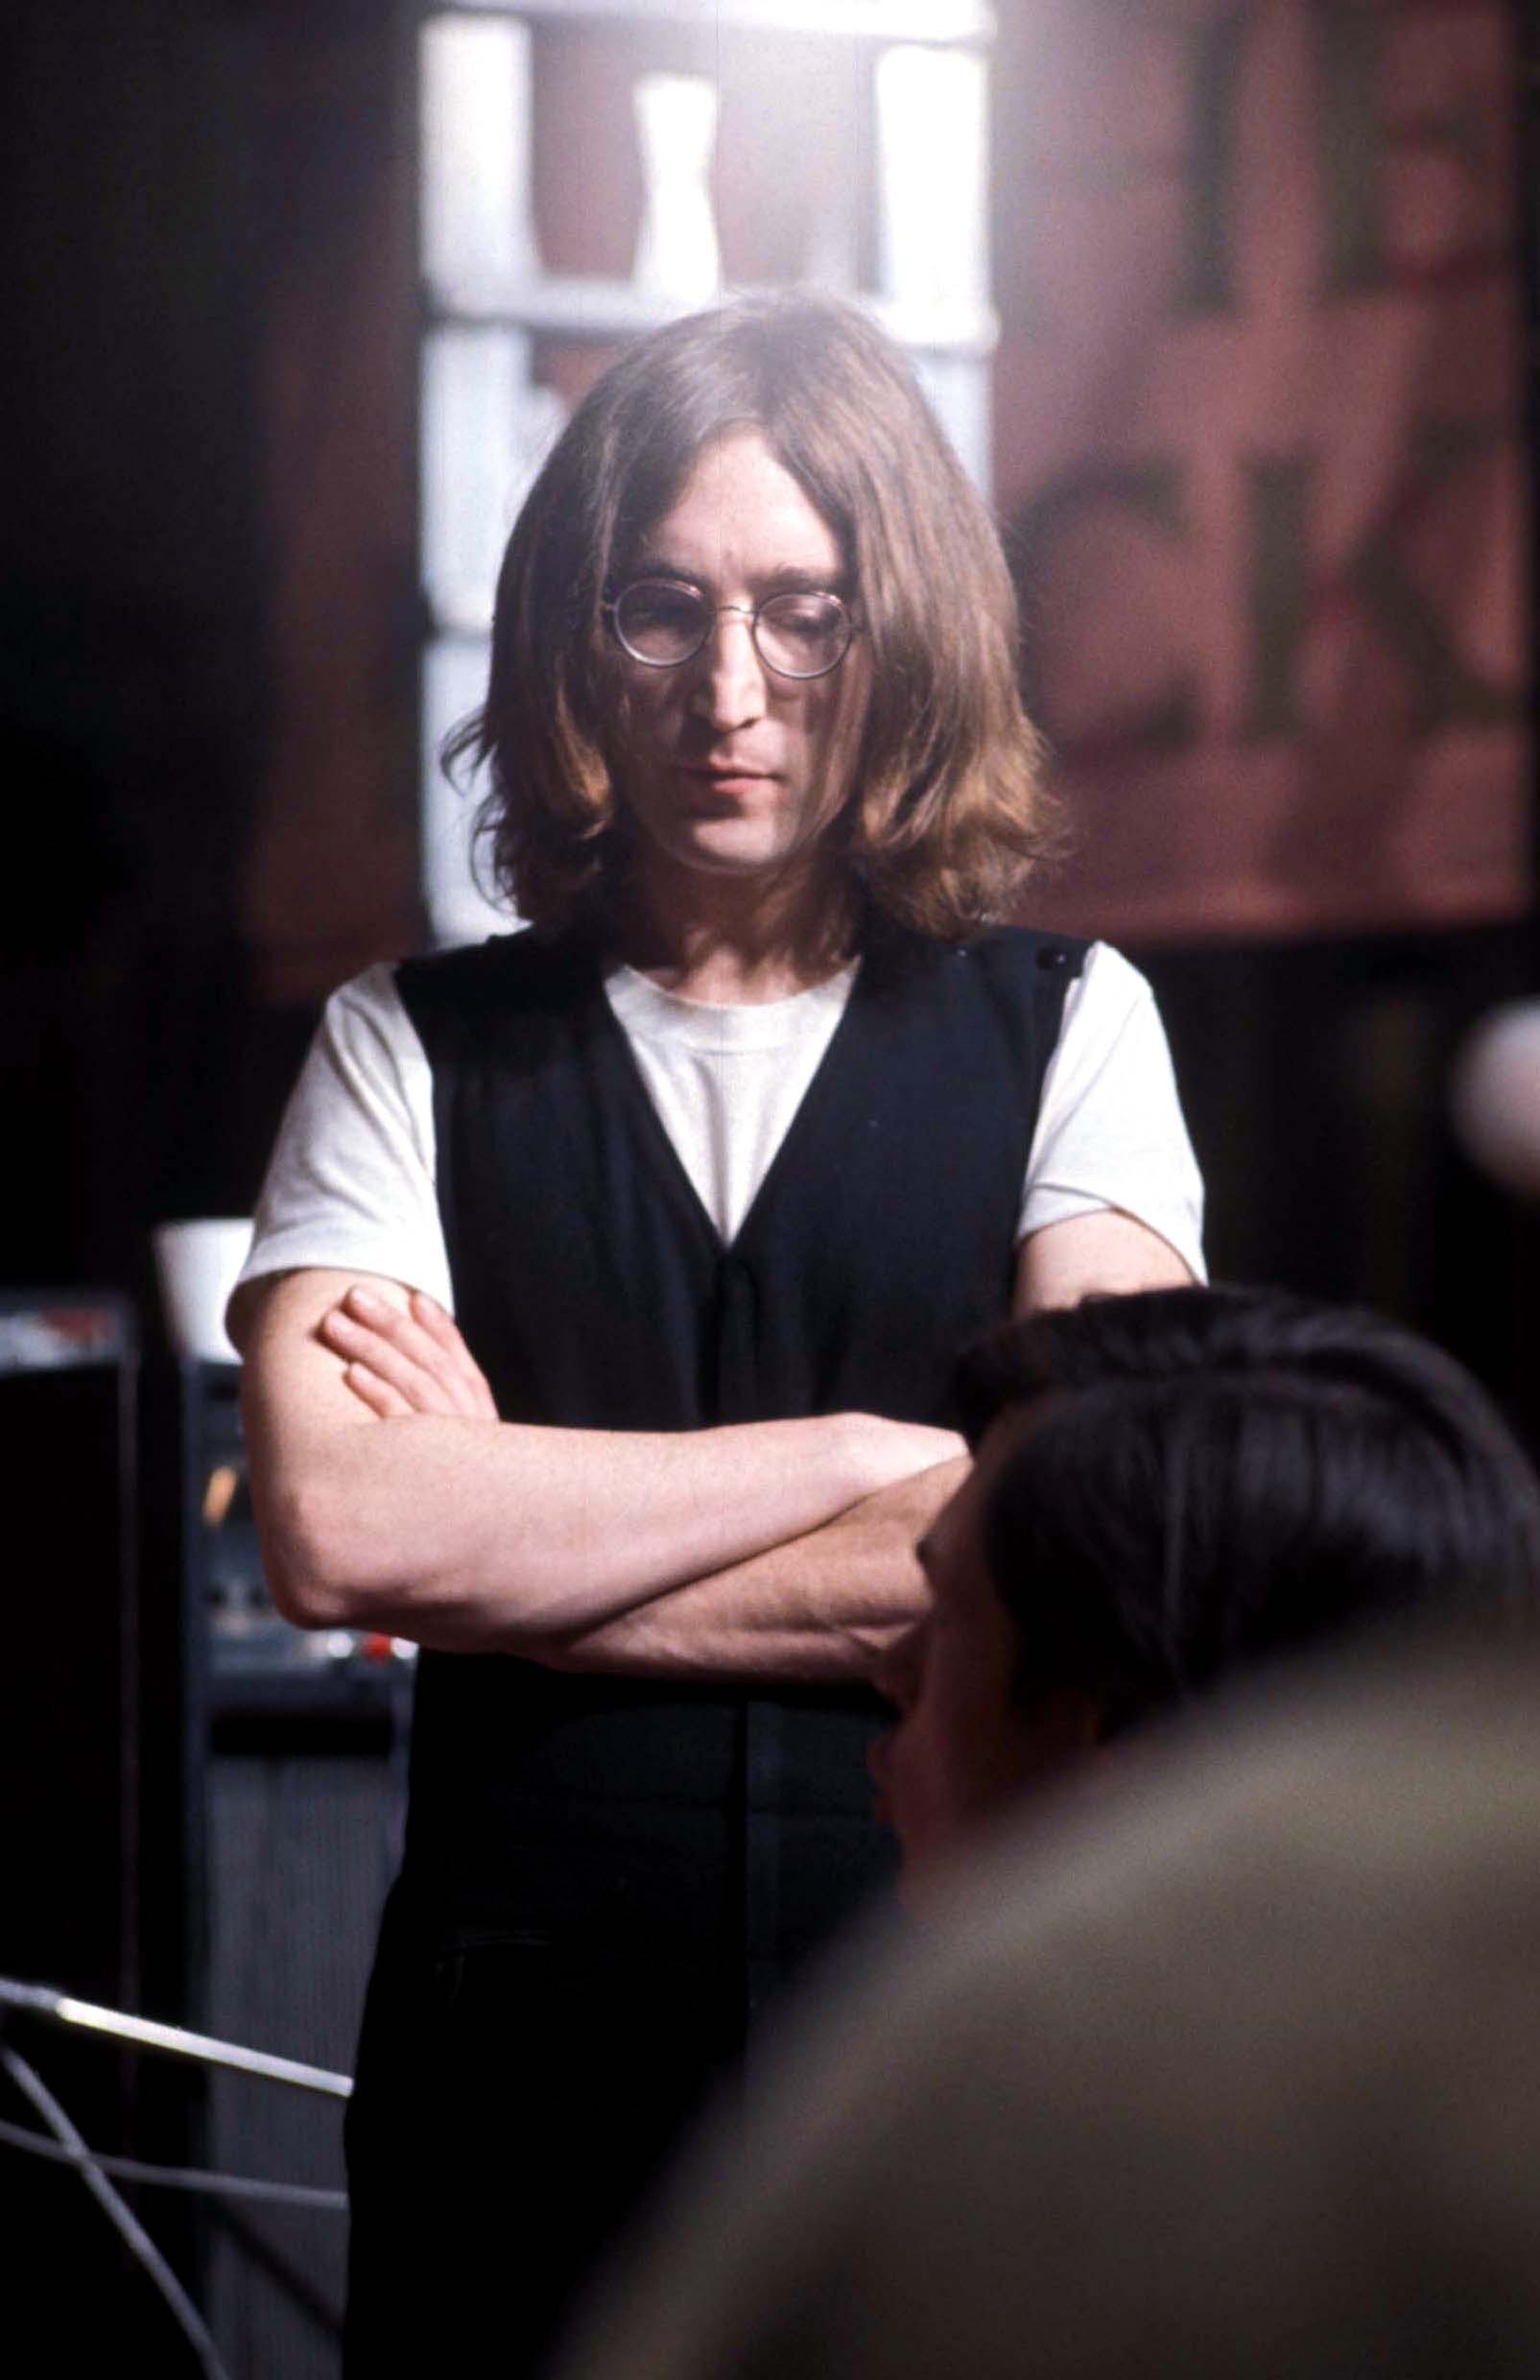 Mark Chapman, The Man Who Killed John Lennon, Apologizes